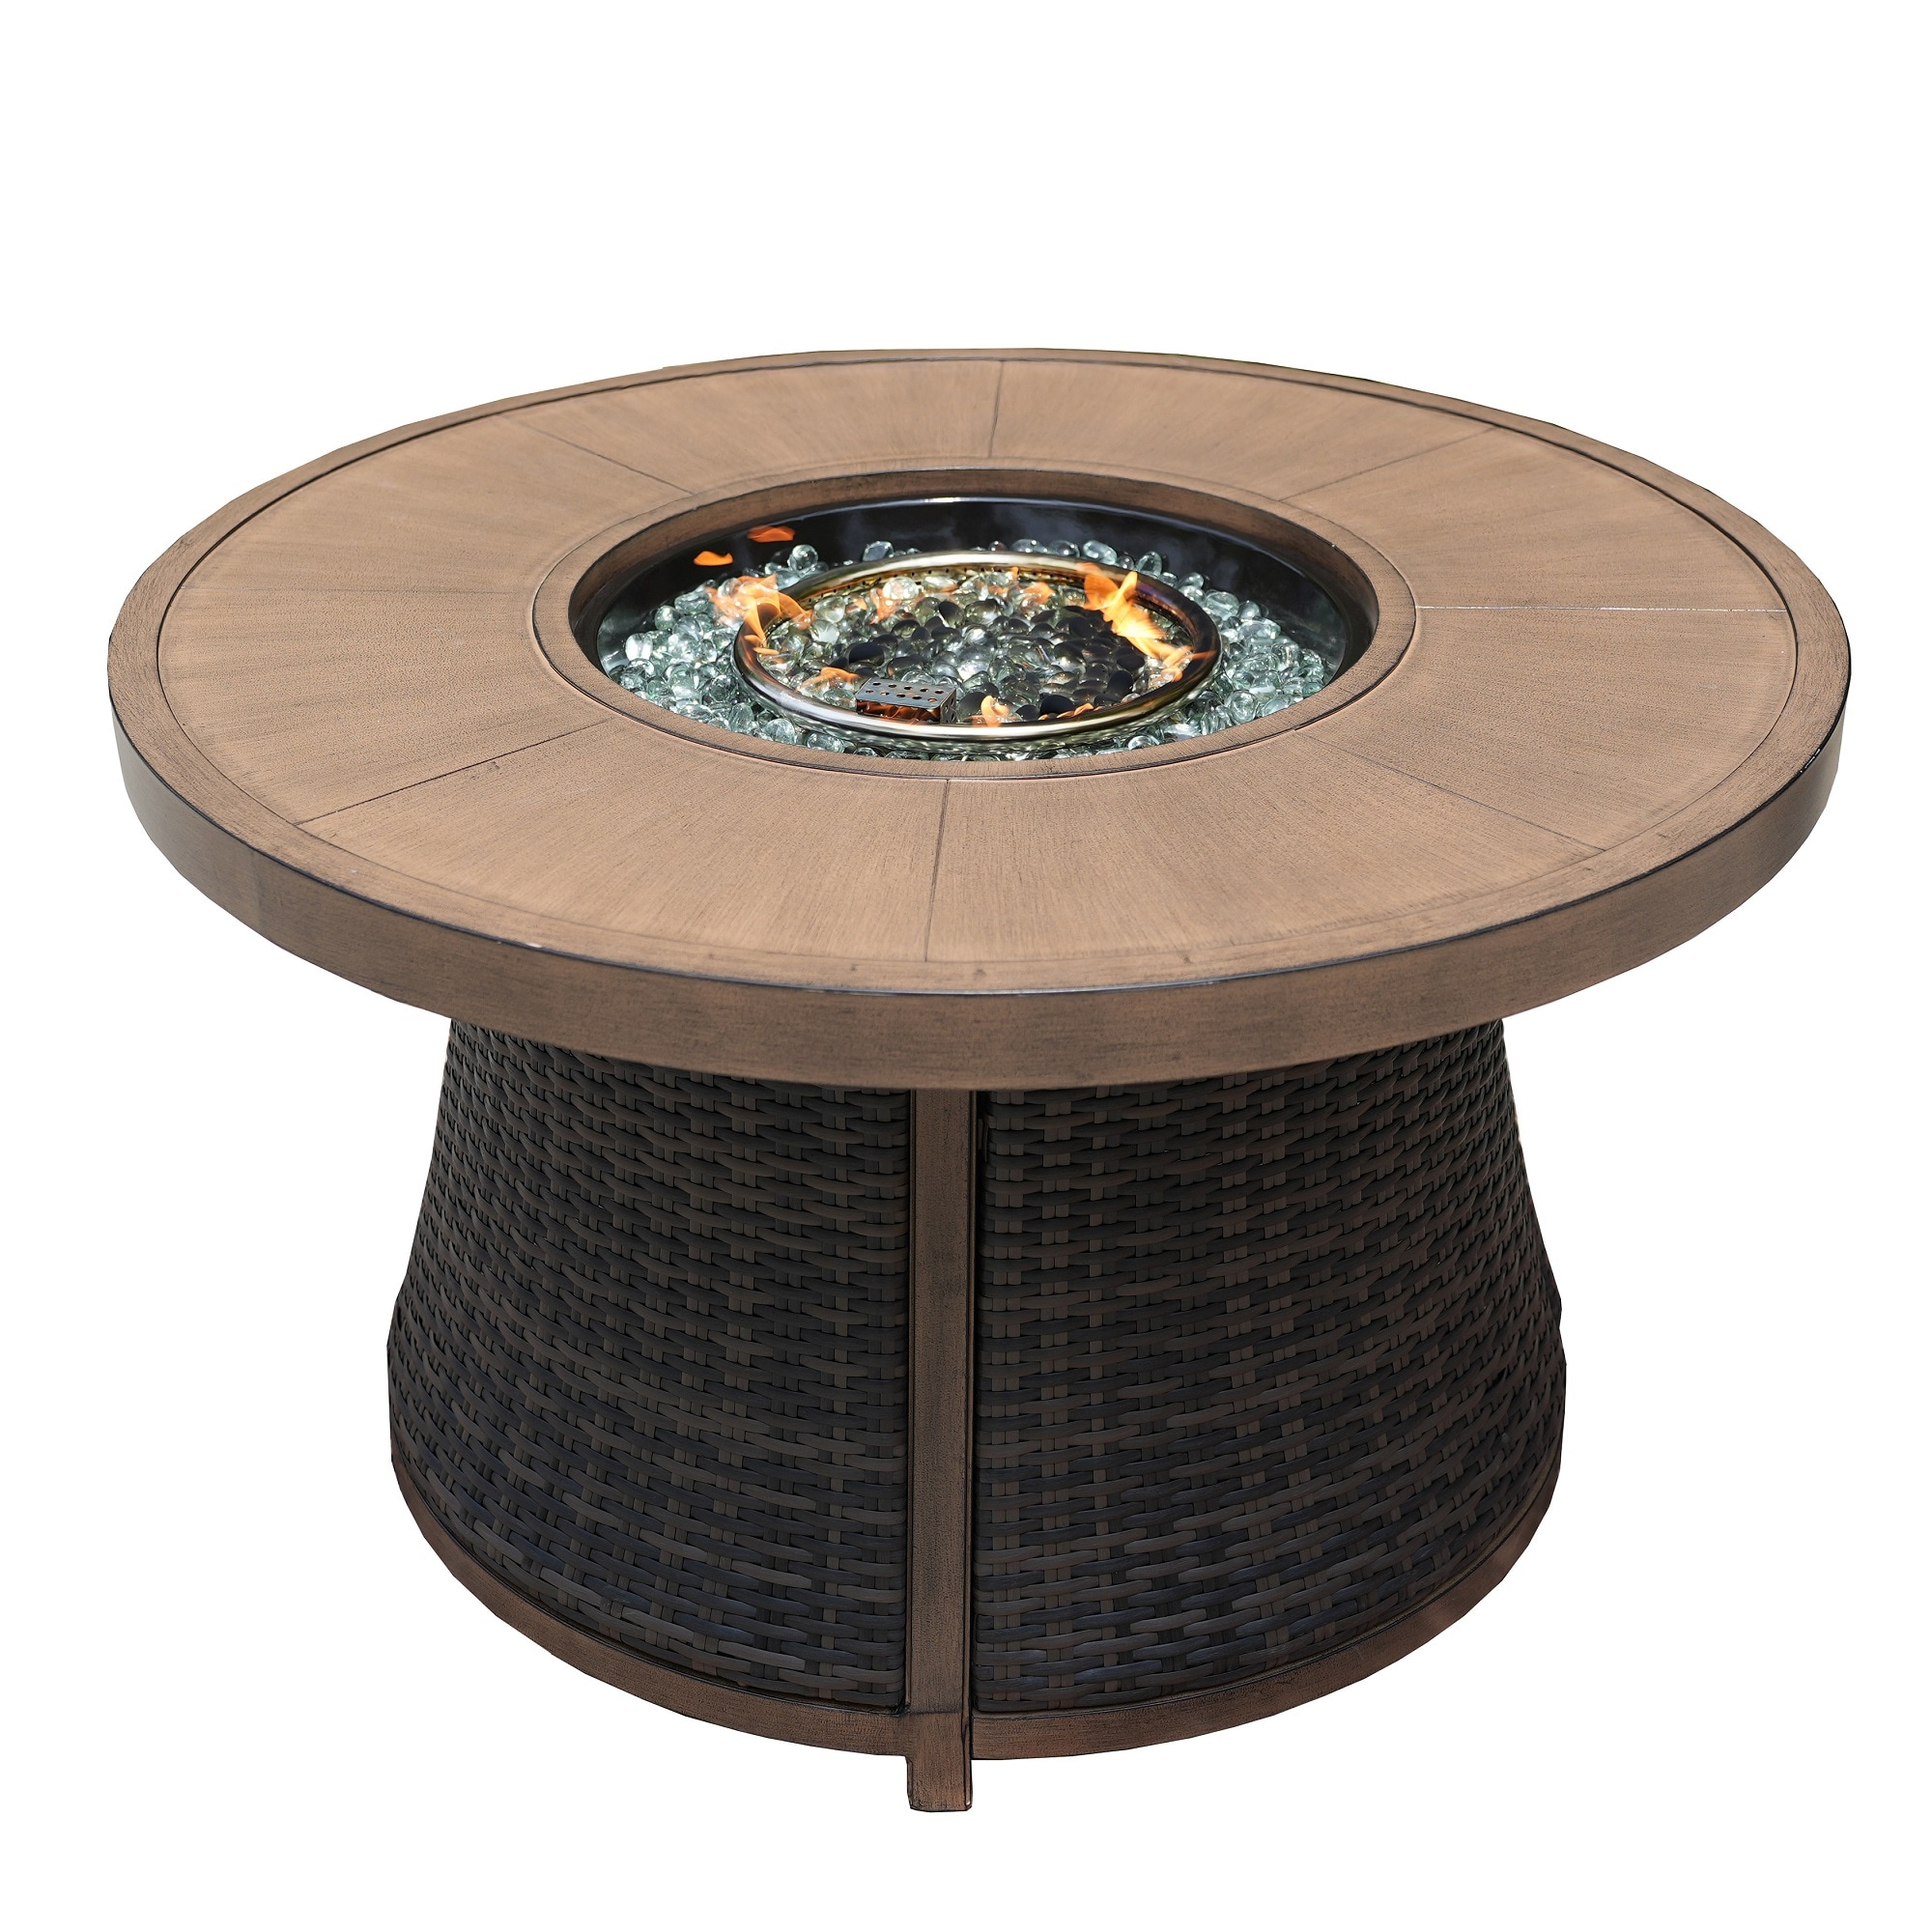 Moda Furnishings Dorothy Round Wicker Outdoor Coffee Table 42-in W x 42